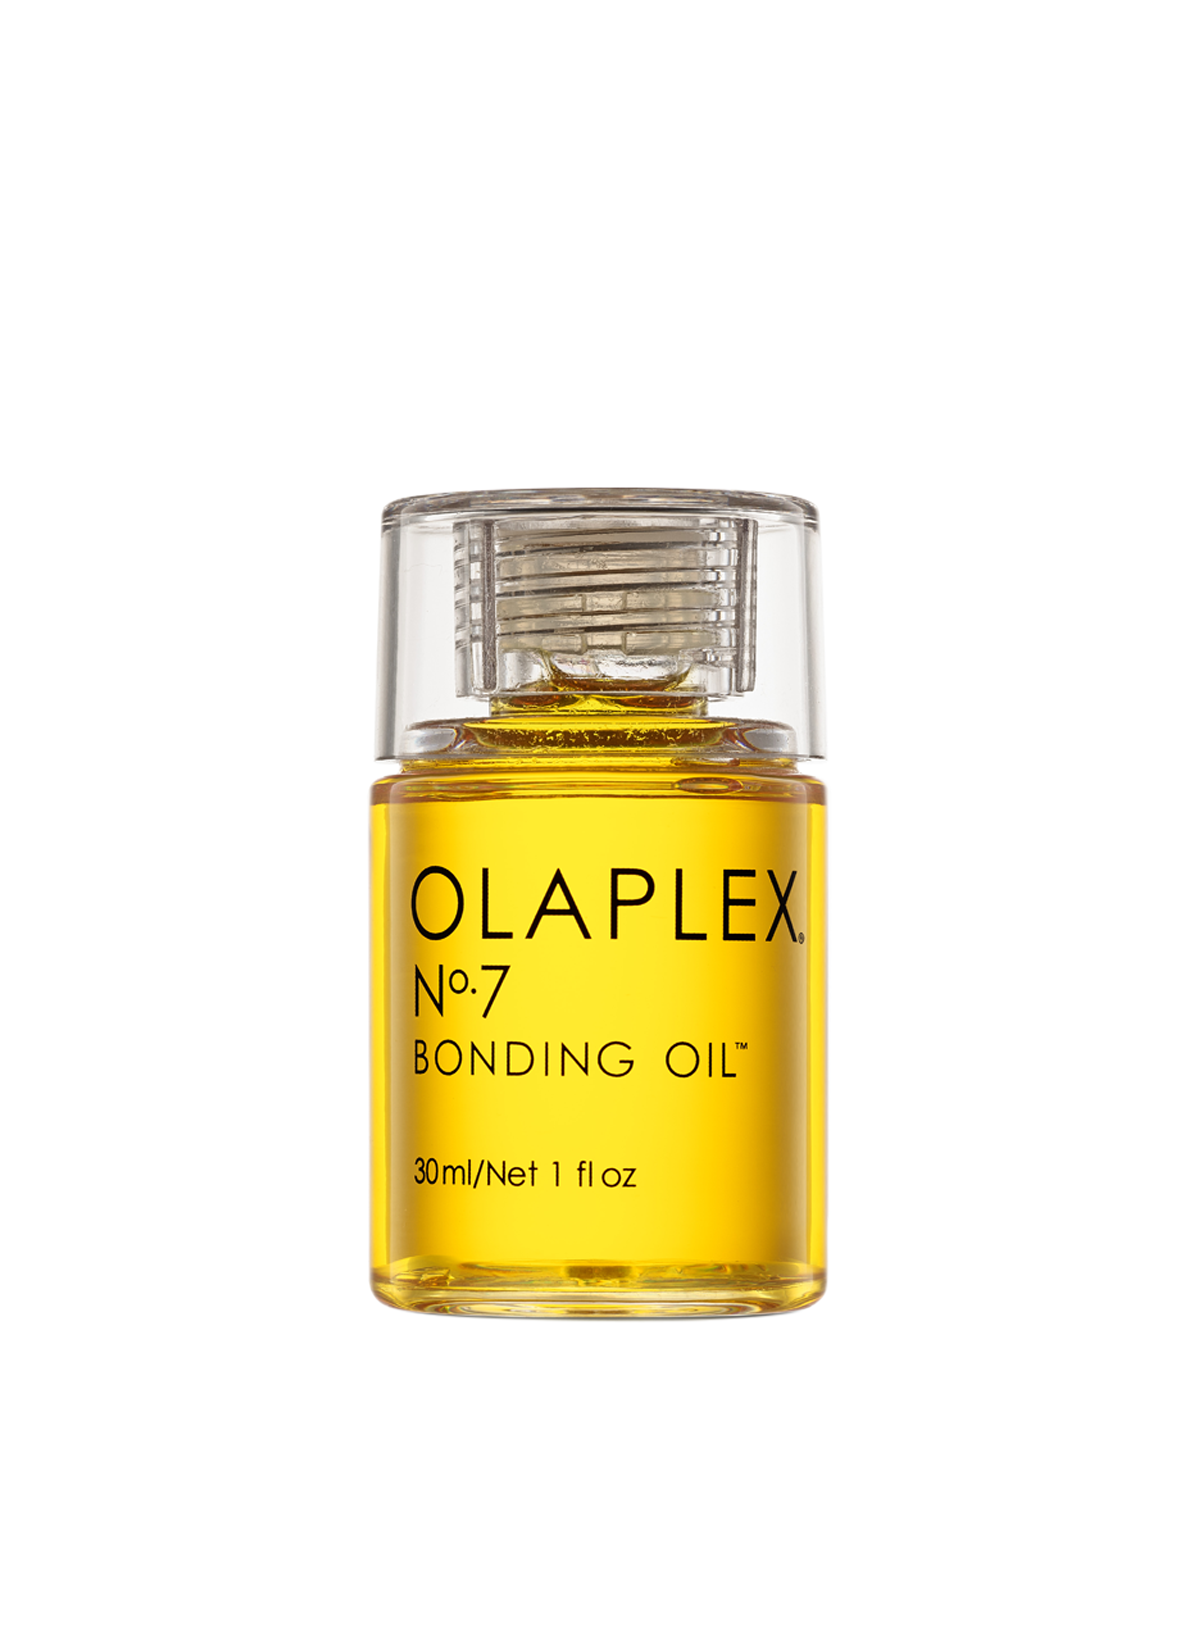 Olaplex Bonding Oil No 7 (30ml)